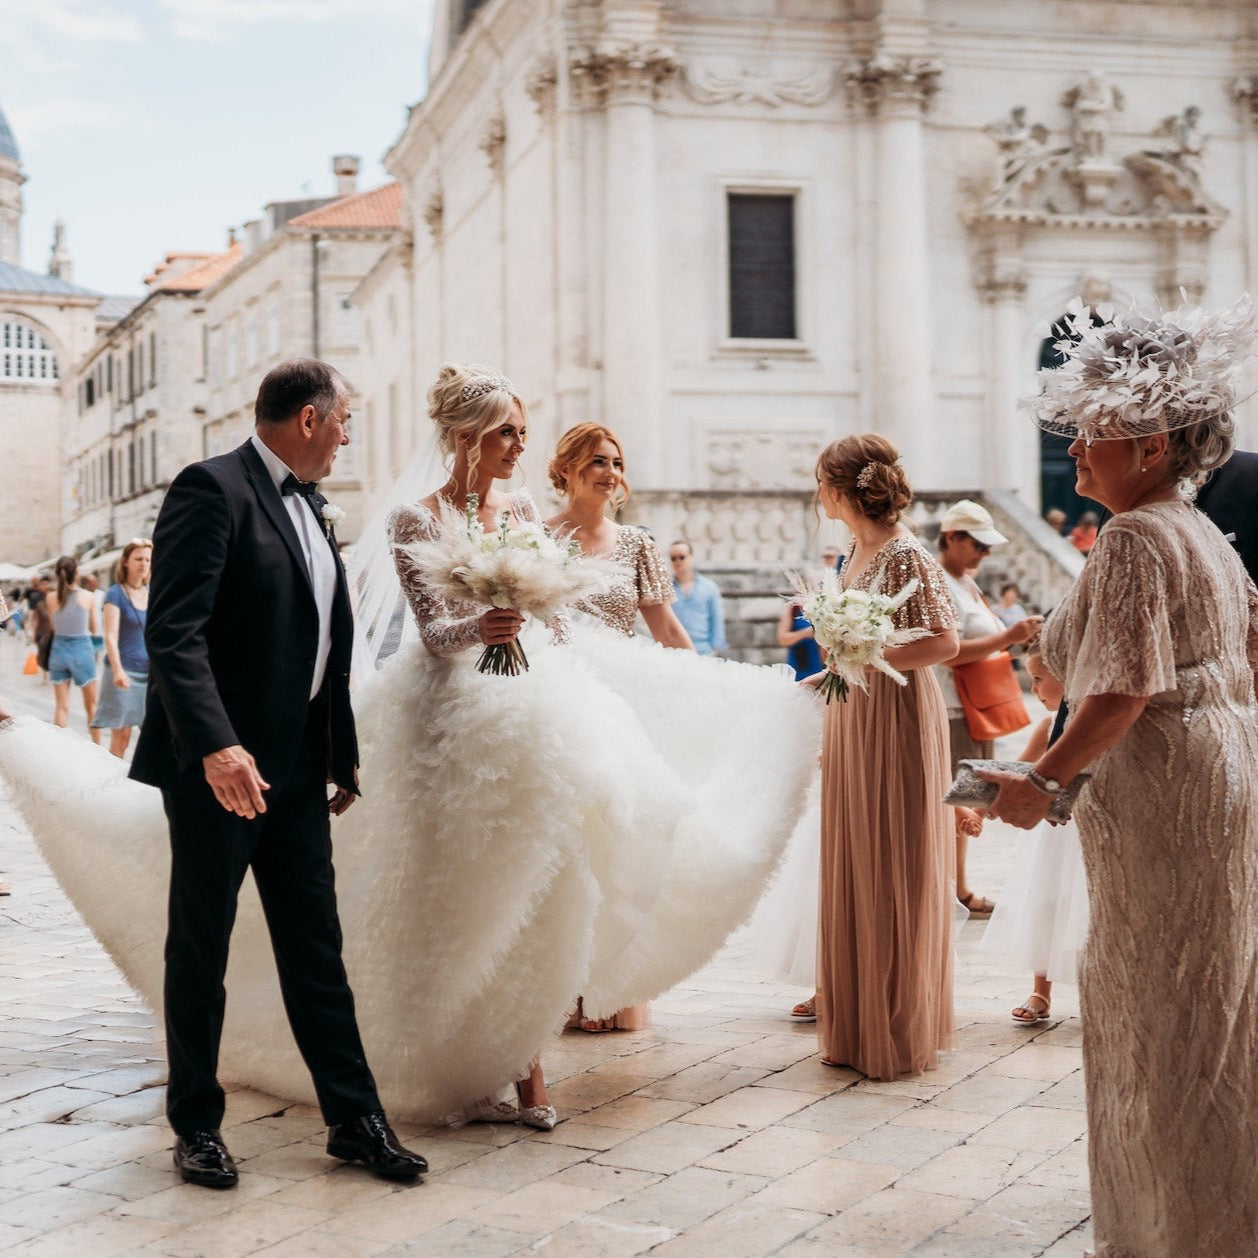 Shoot a wedding with us | Italy - Photo & Cinema